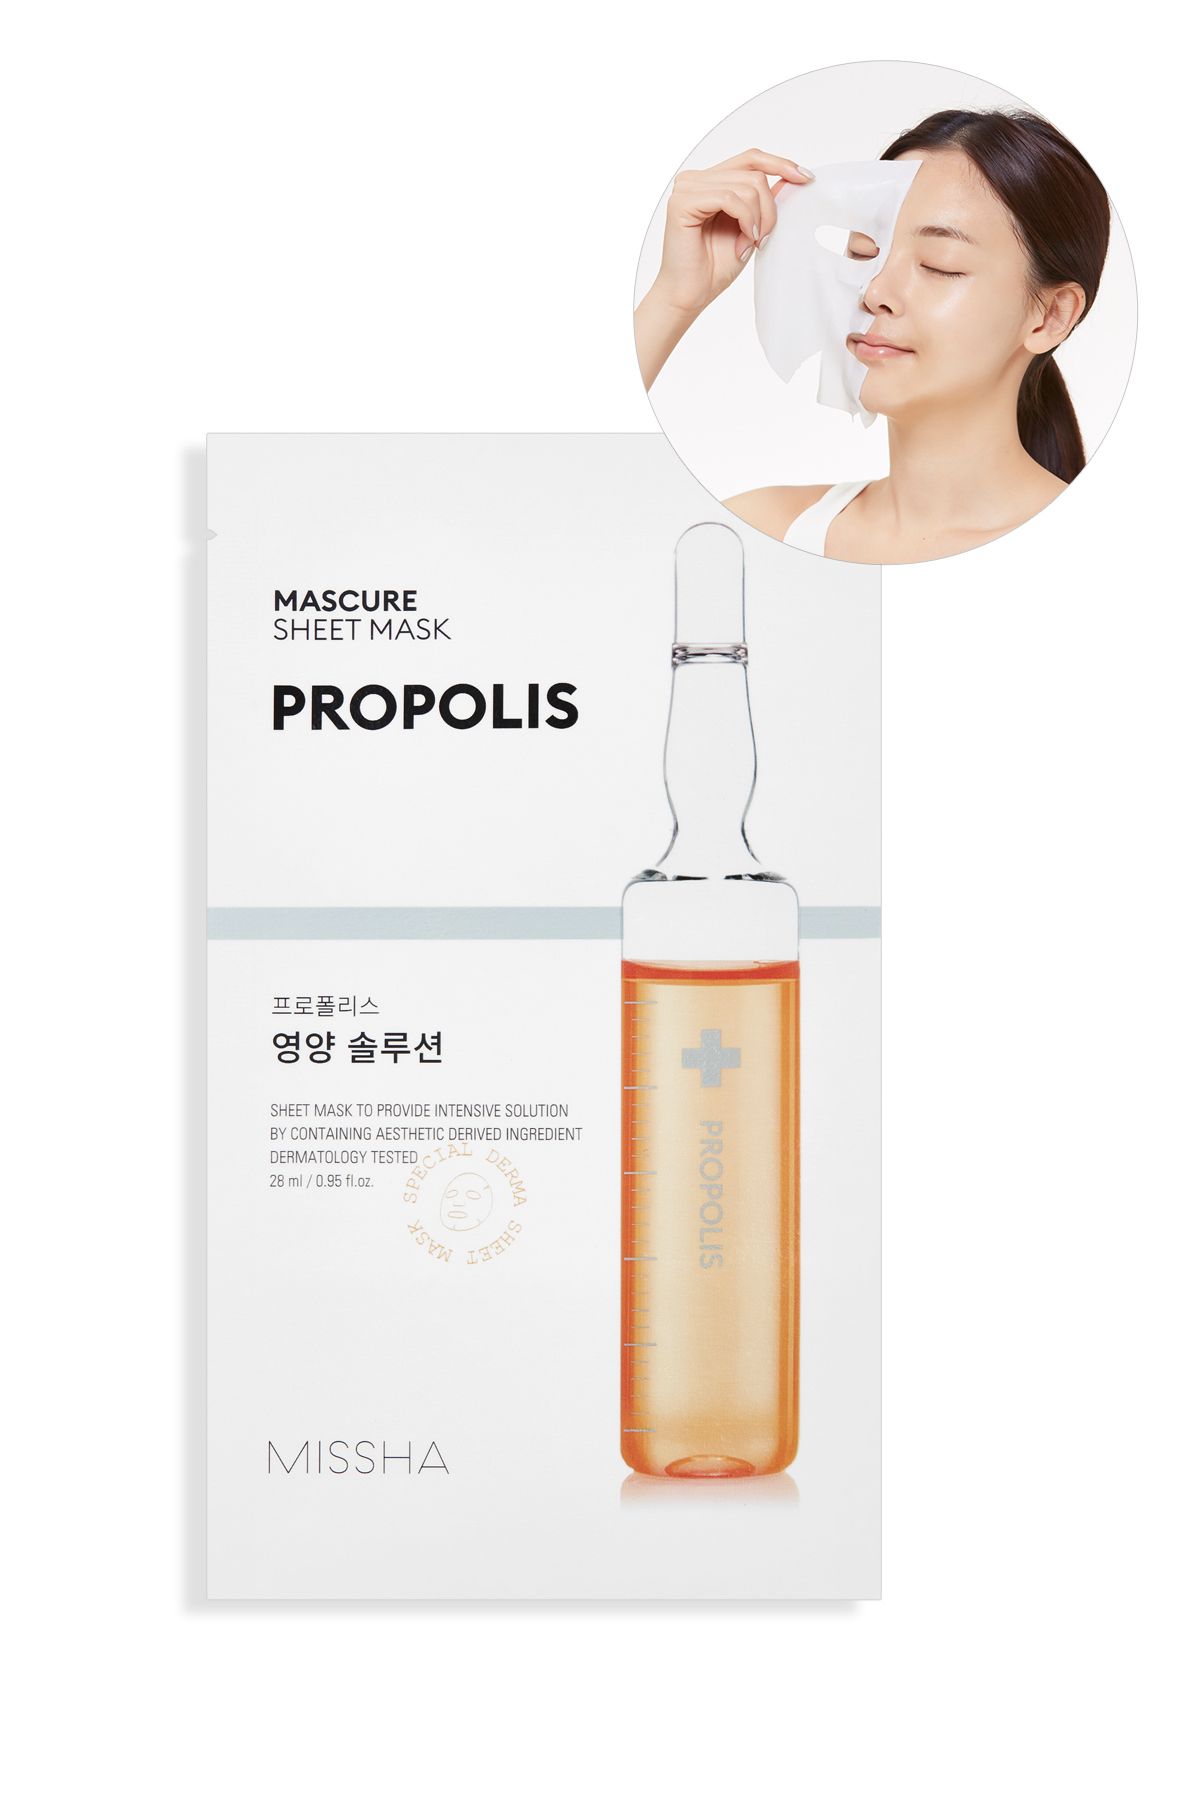 Missha Yoğun Besleyici Propolis Yaprak Maske (1AD) Mascure Nutrition Solution Sheet Mask